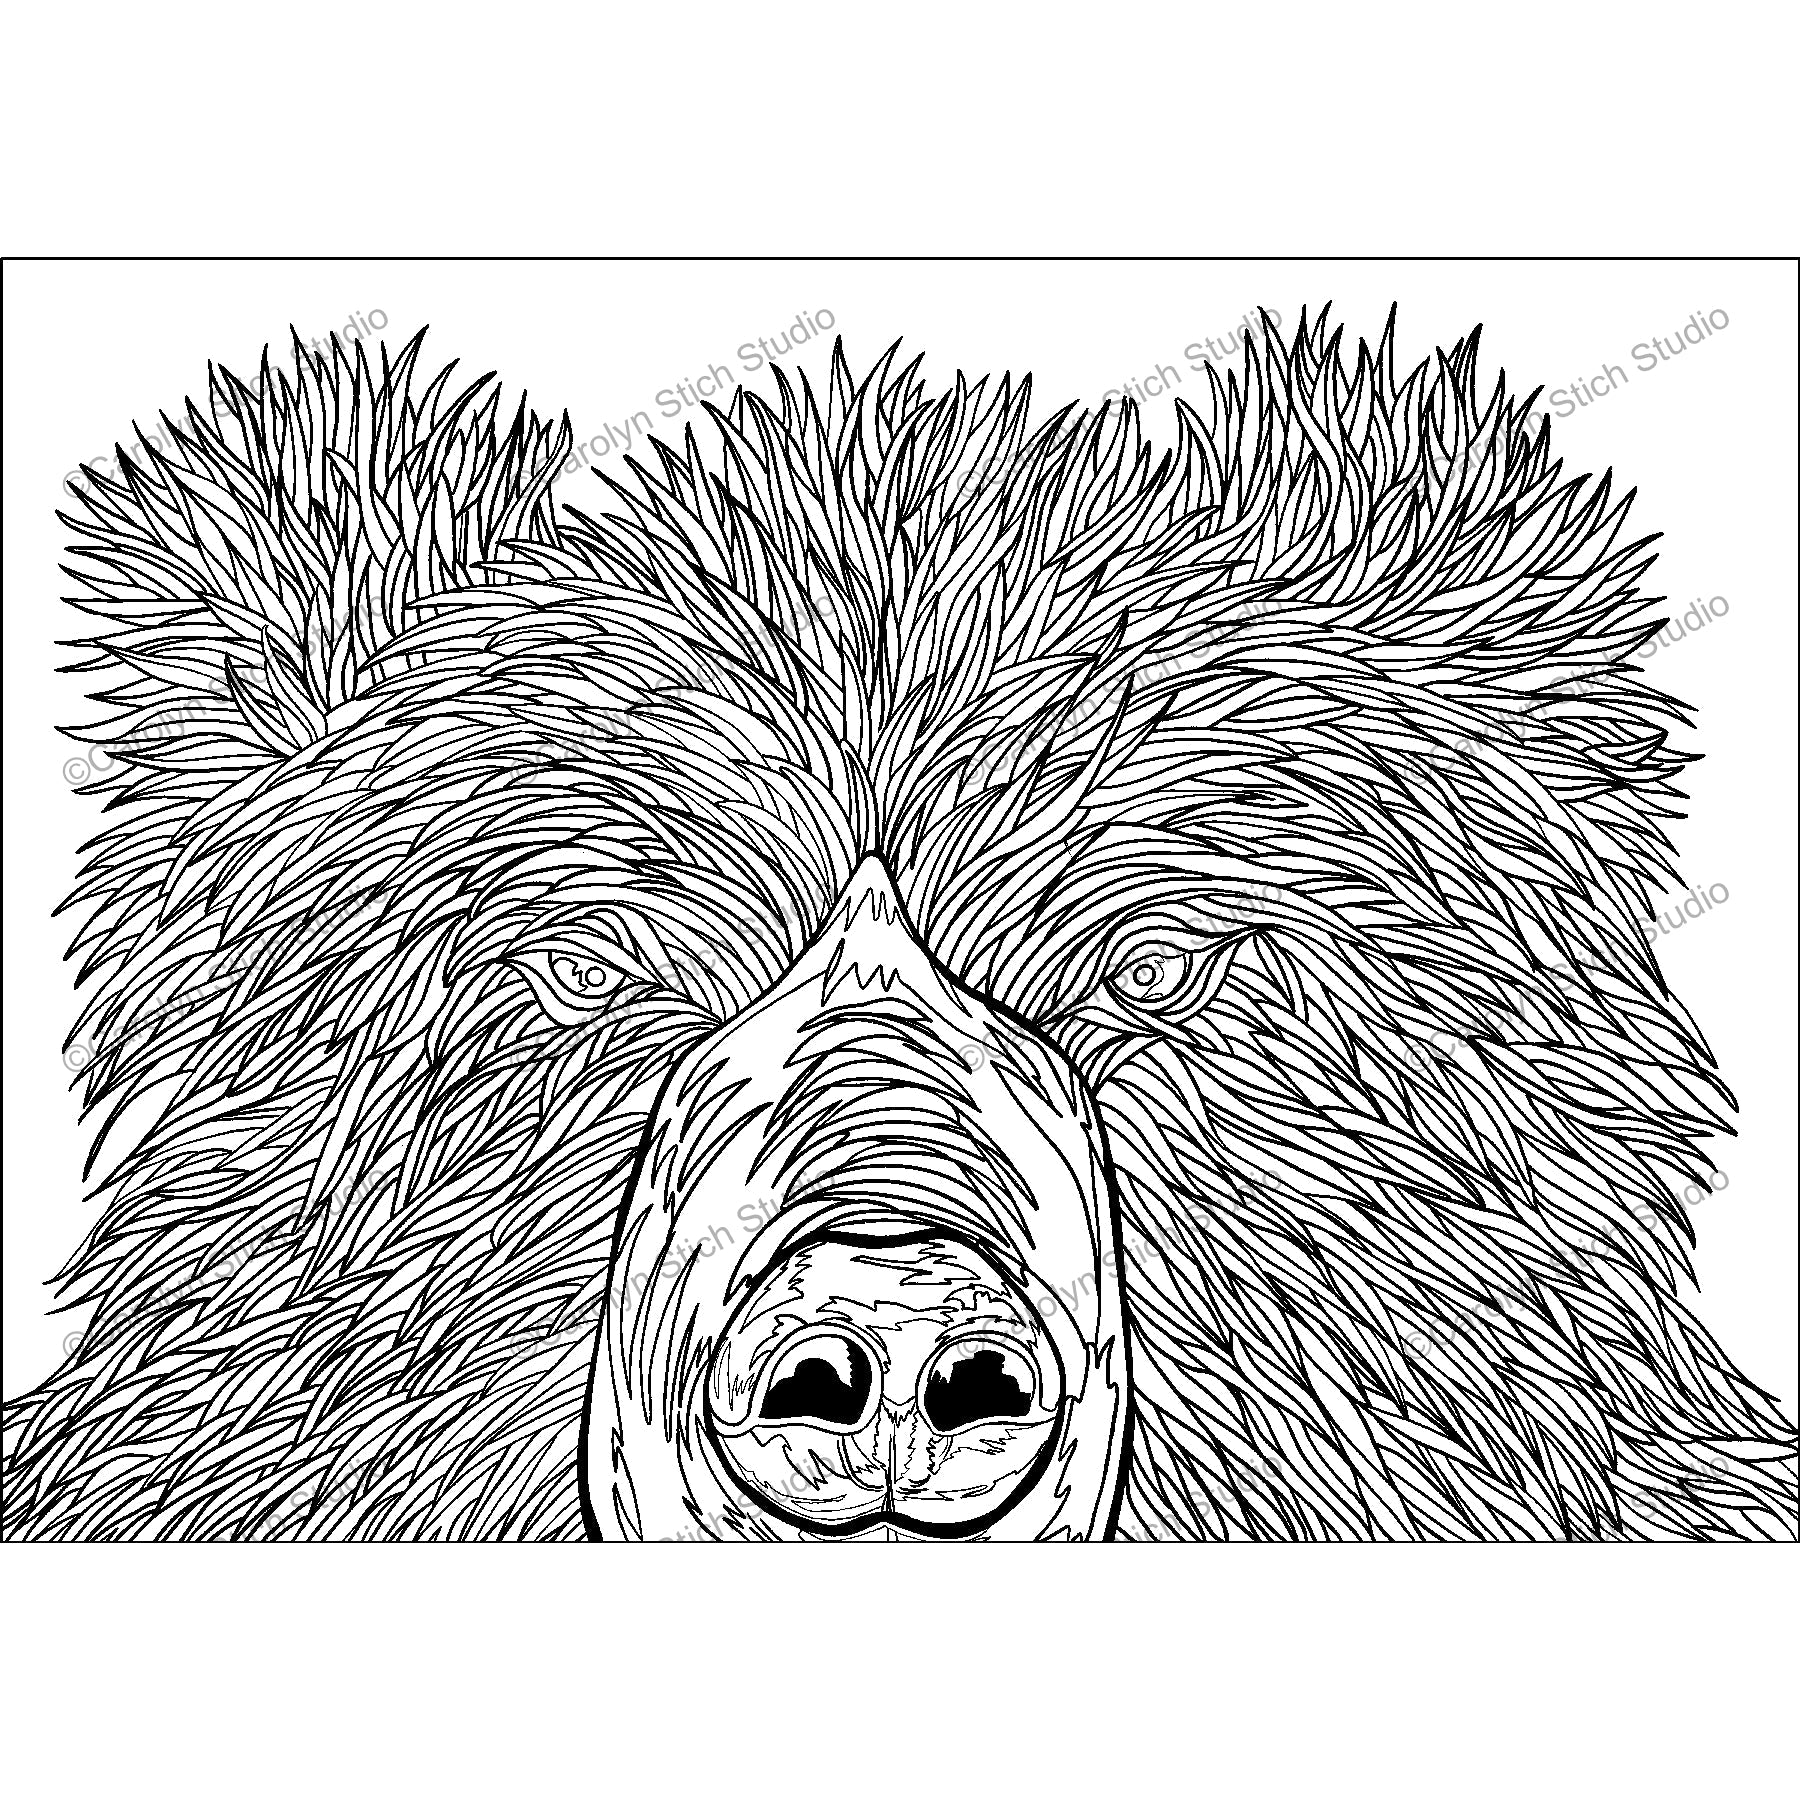 Bear, rug hooking pattern